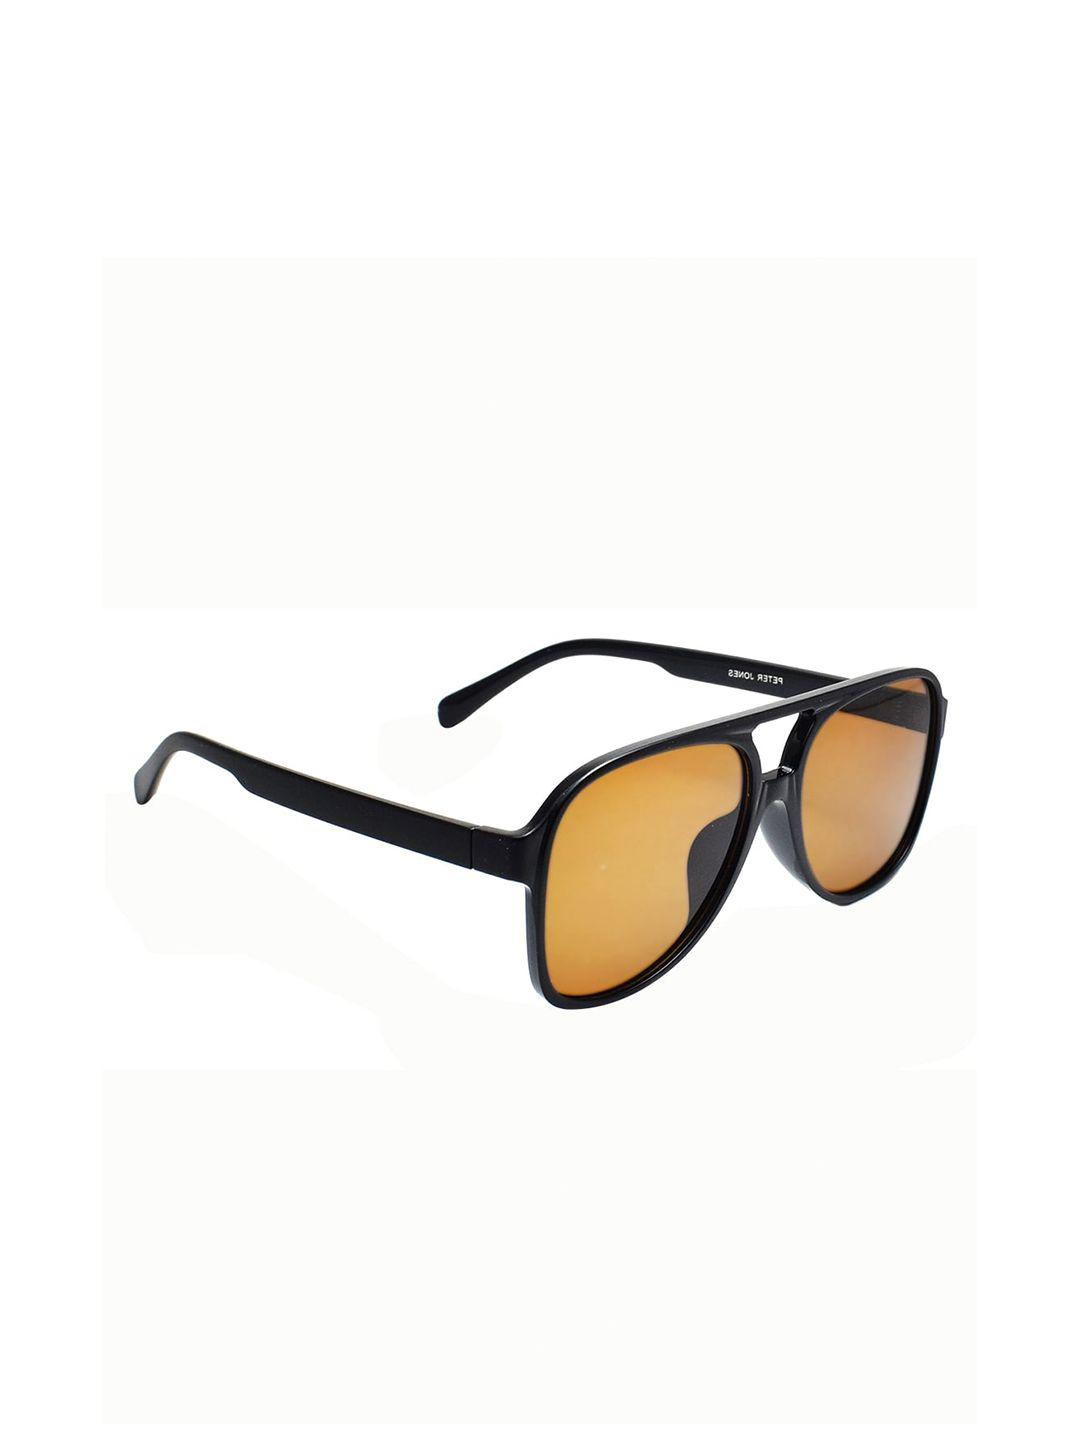 peter jones eyewear unisex brown lens & black square sunglasses with uv protected lens